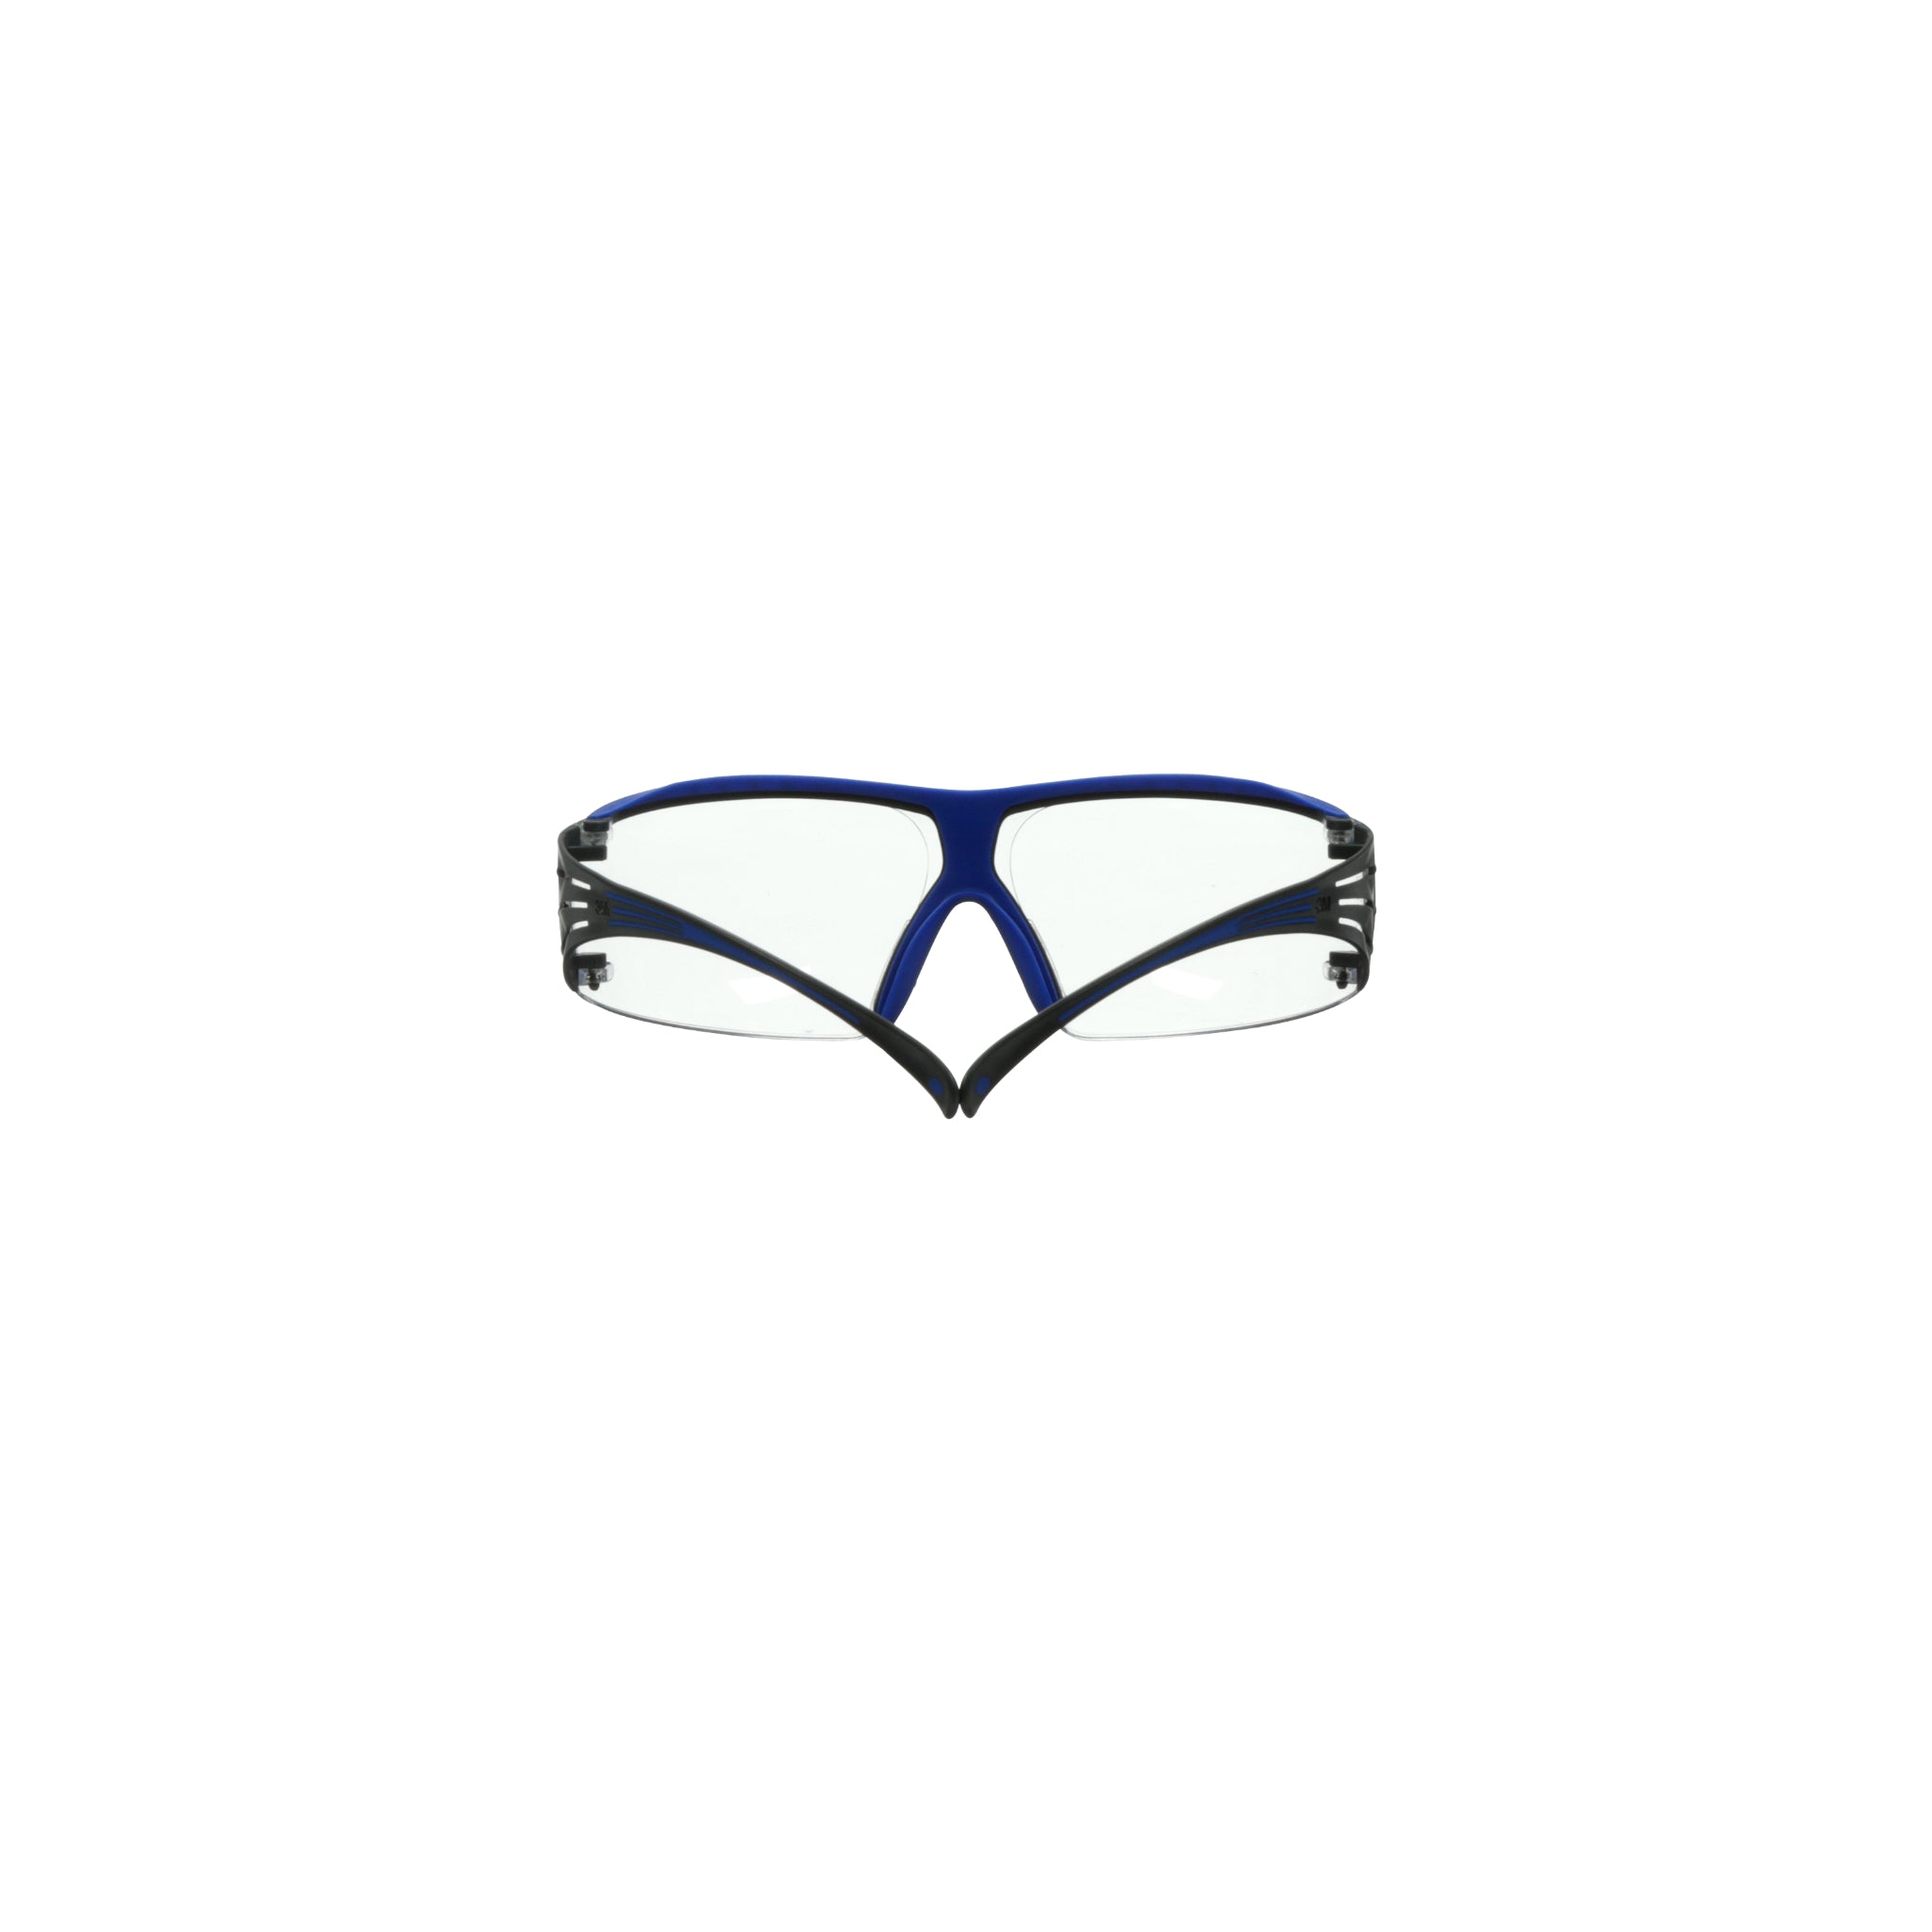 3M SecureFit 400 Series Safety Glasses SF401XSGAF-BLU, Blue/Gray, Clear Scotchgard Anti-Fog/Anti-Scratch Lens, Case of 20